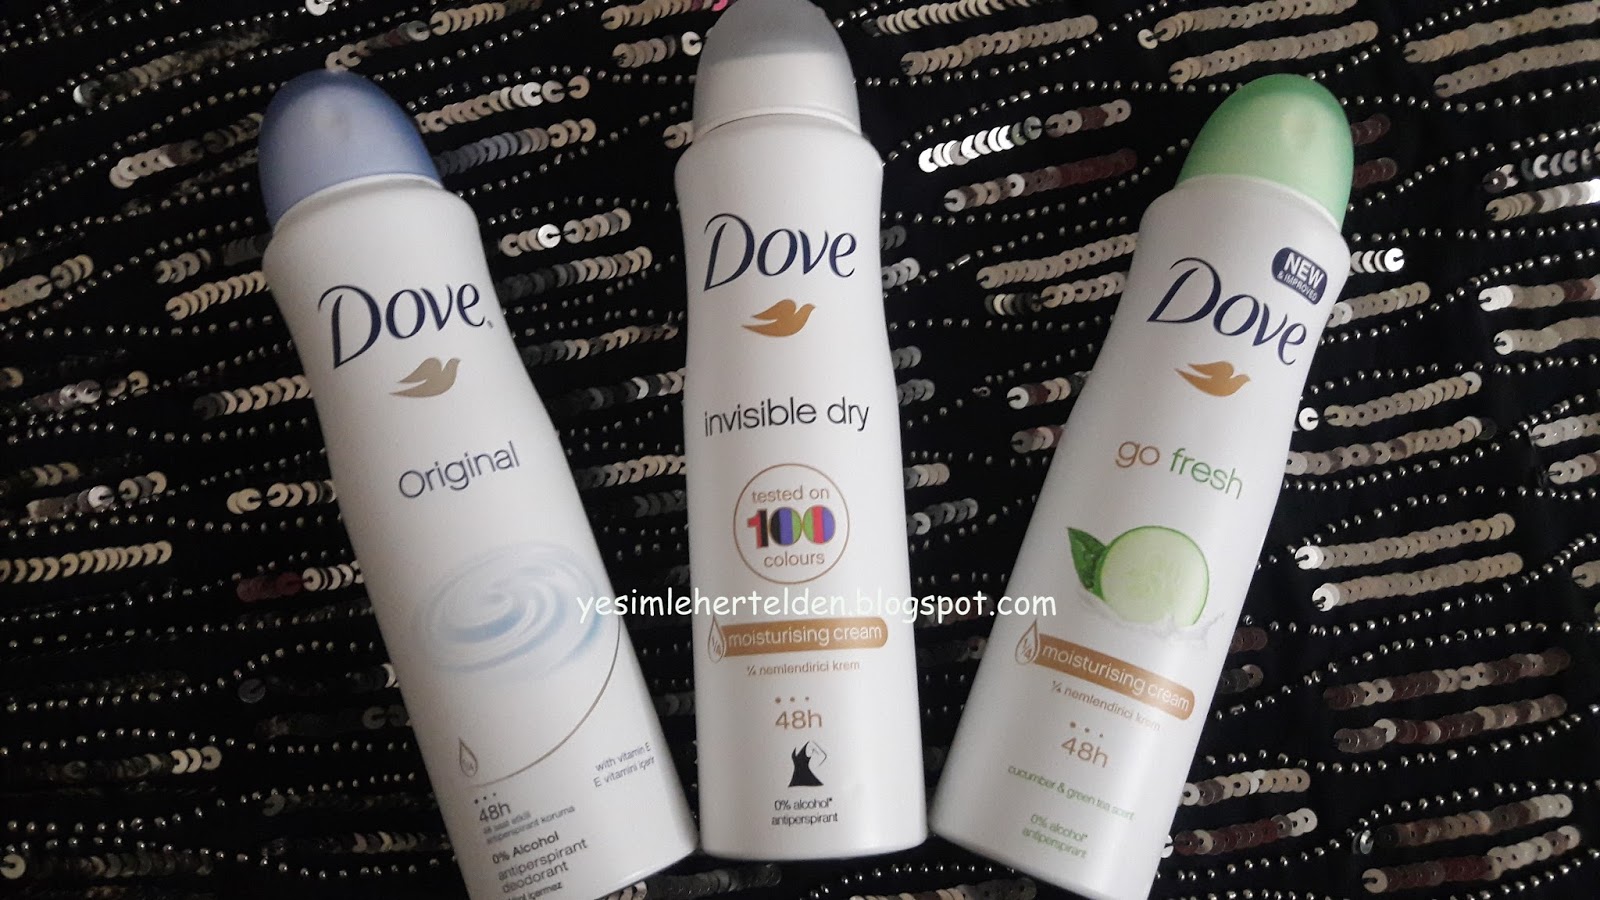 Dove Original / İnvisible Dry / Go Fresh Deodorantlar Yeşimle Her